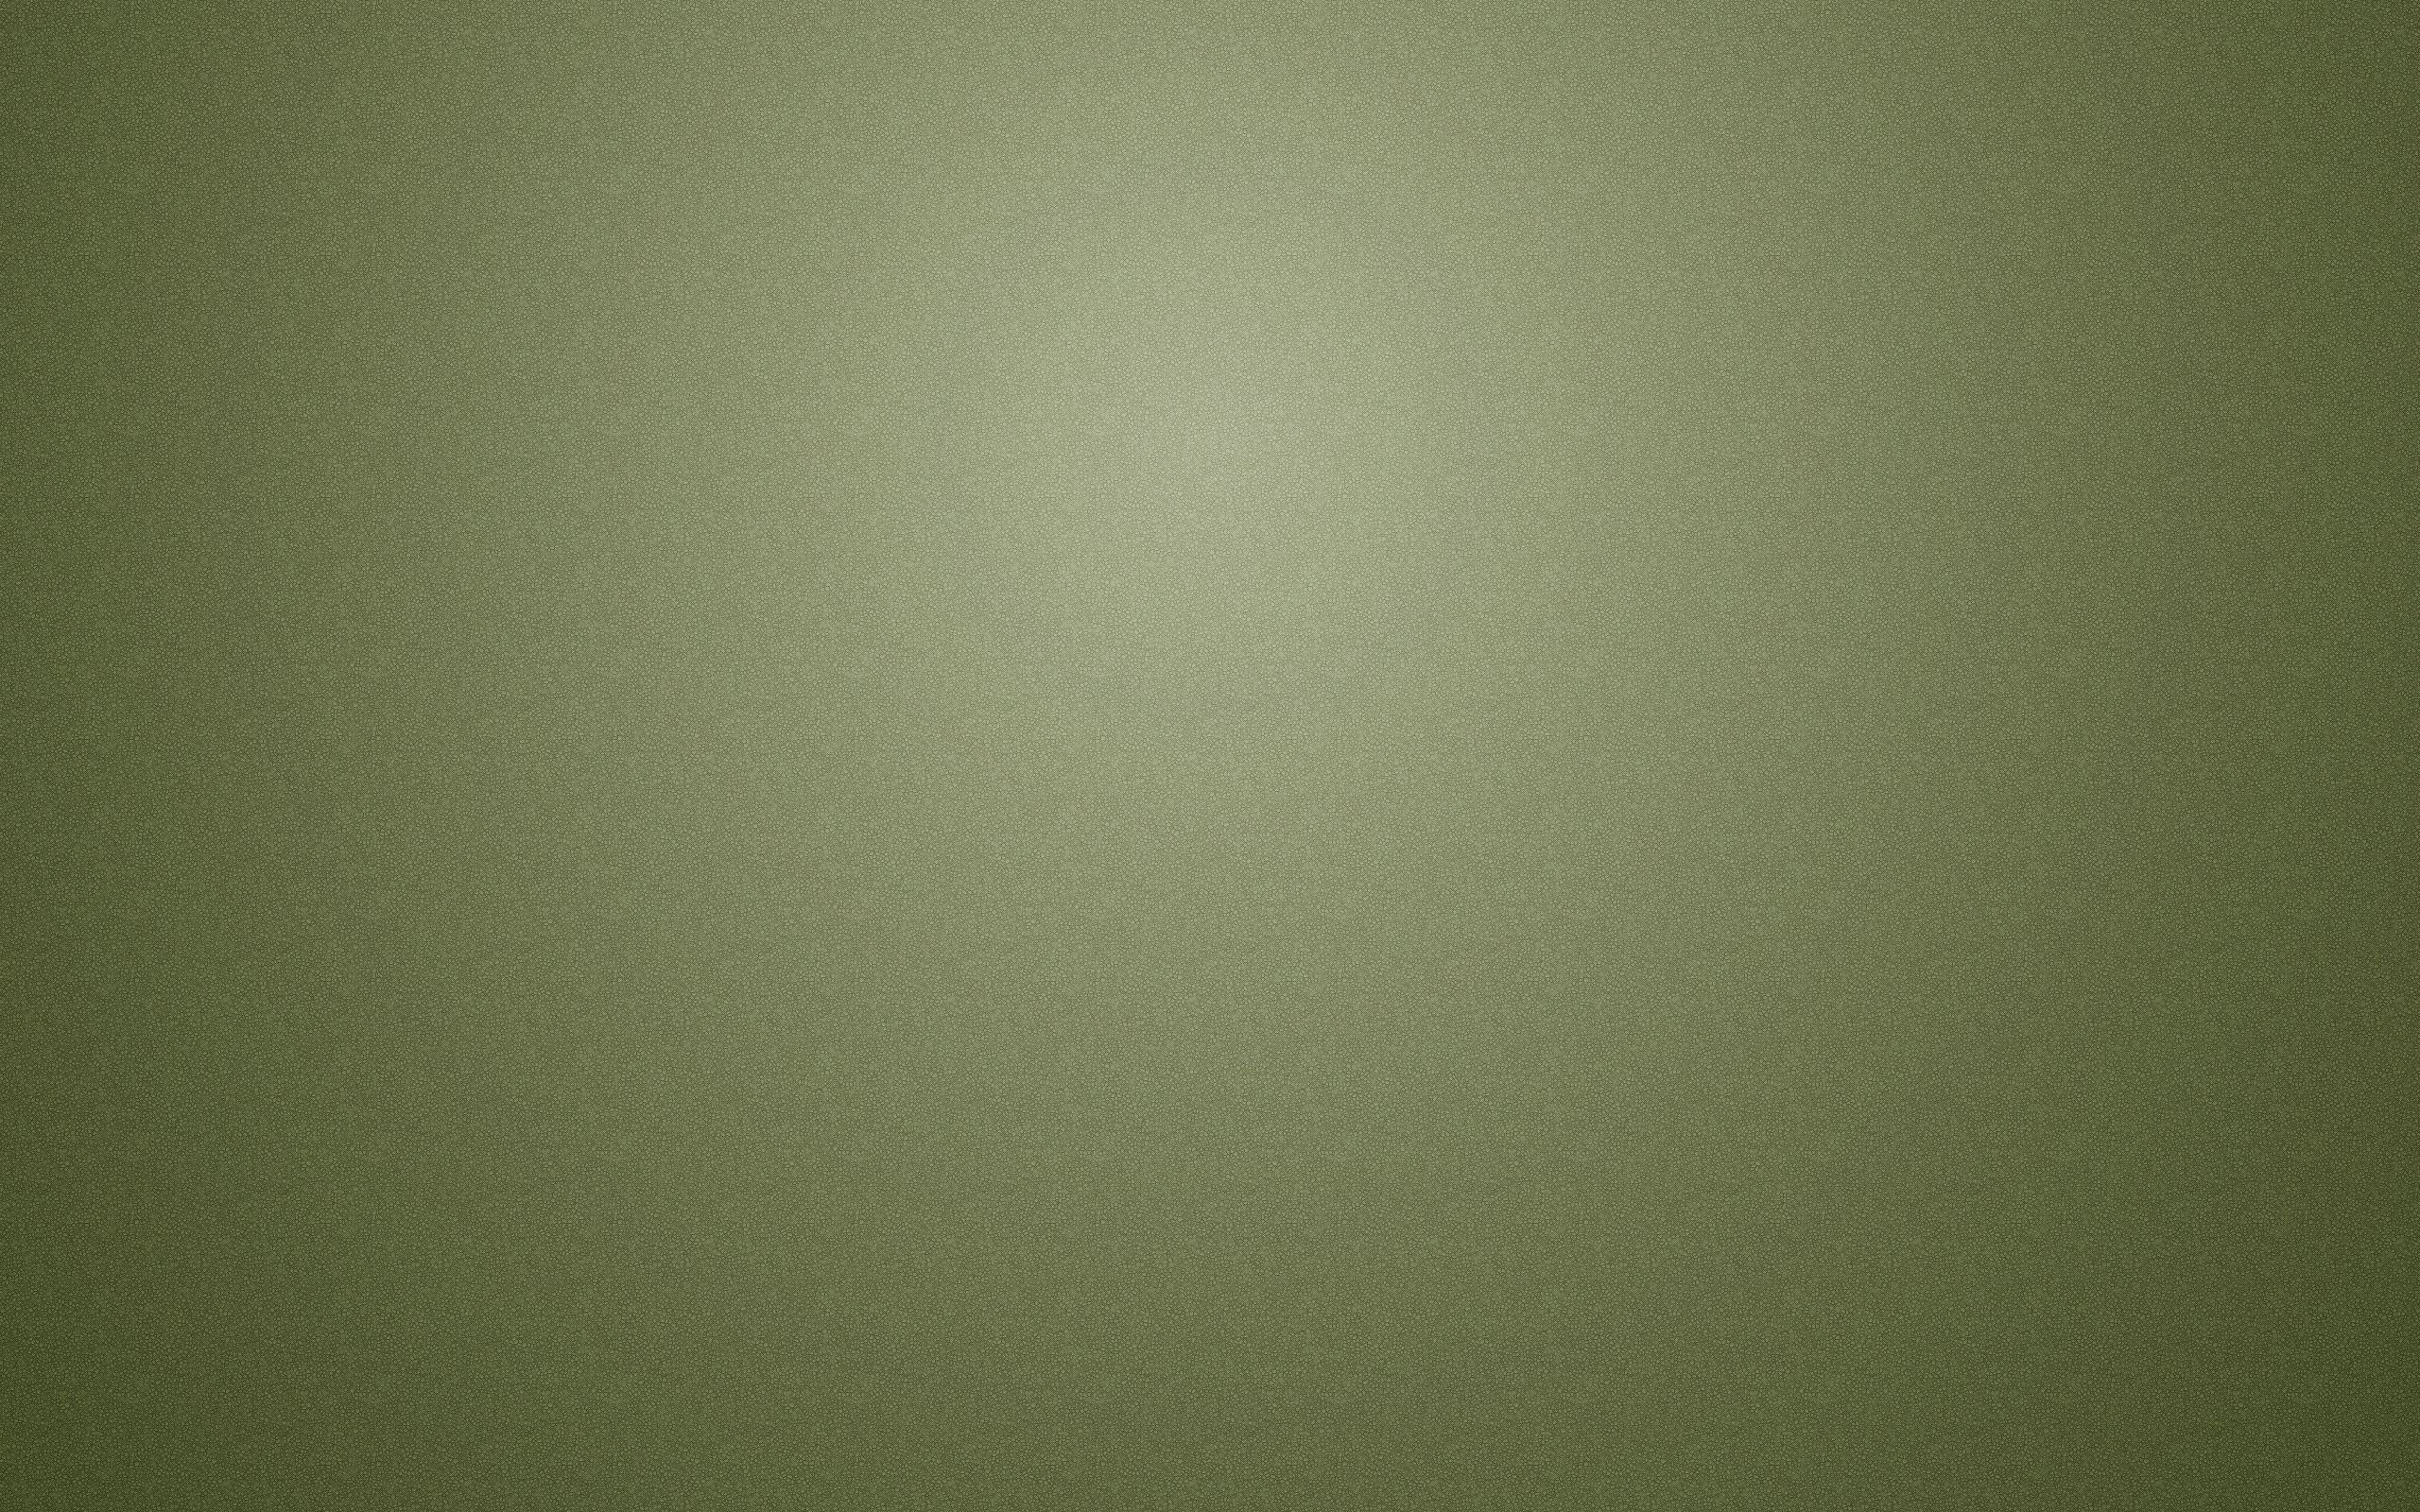 Plain Color Wallpaper Background Free Download. Olive green